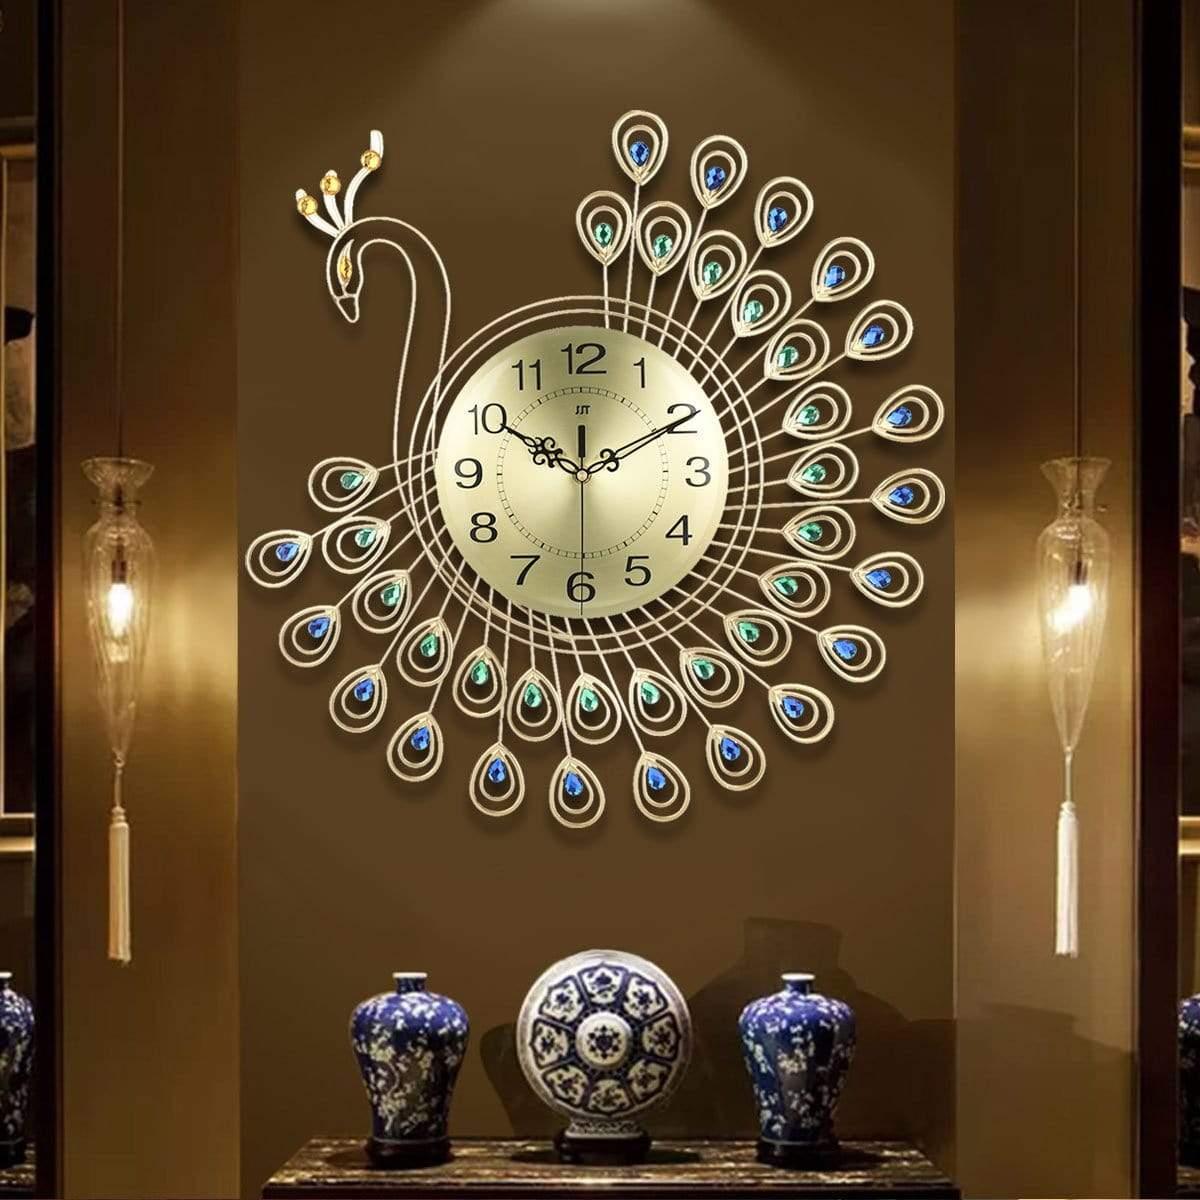 Shop 0 Large 3D Gold Diamond peacock Wall Clock Metal Watch for Home Living Room Decoration часы настенные DIY Clocks Ornaments 53x53cm Mademoiselle Home Decor